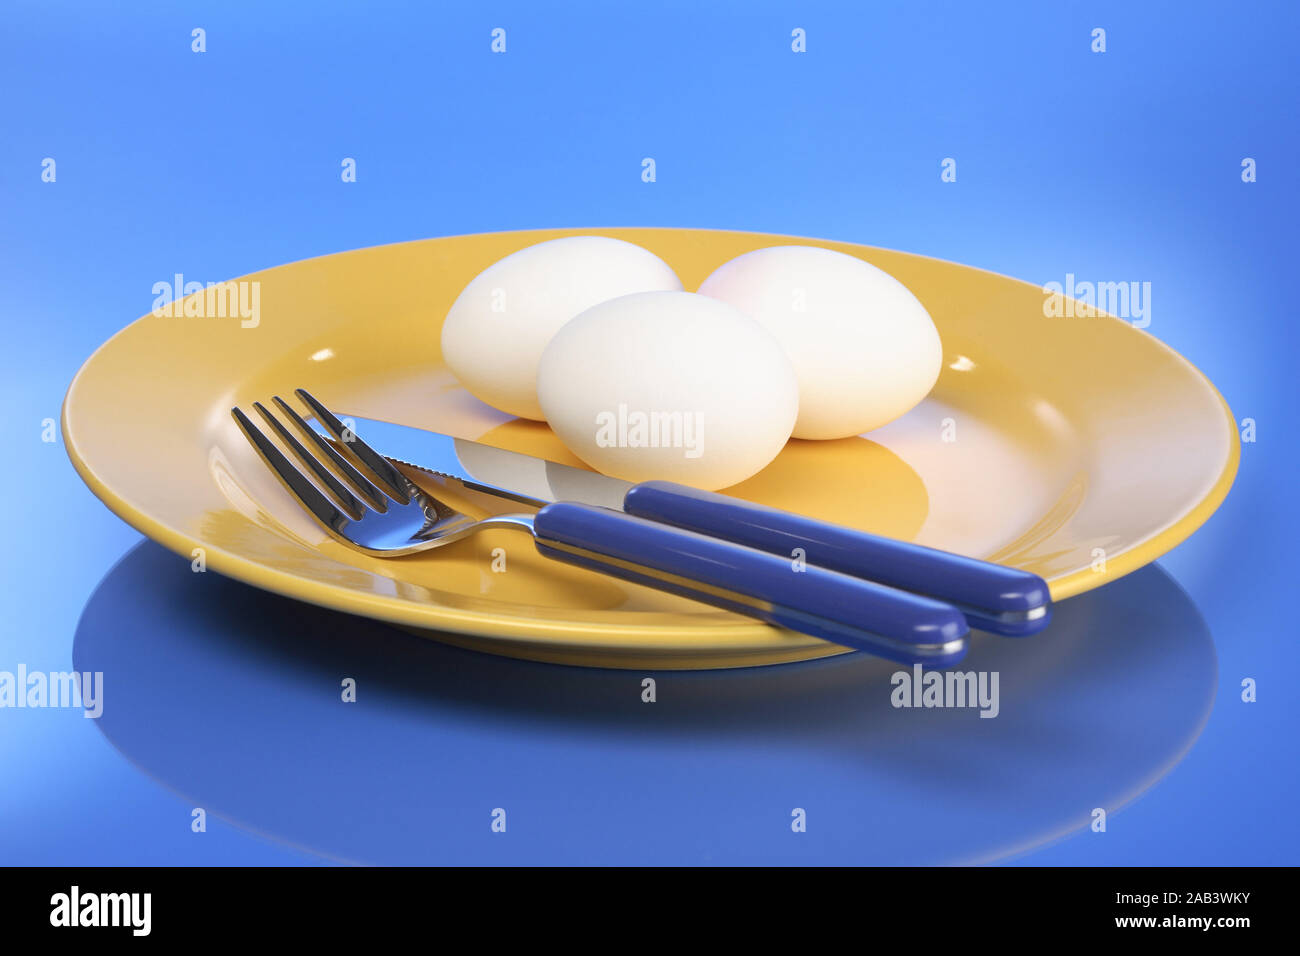 Teller mit Besteck und Eier |Plate and cutlery with eggs| Stock Photo